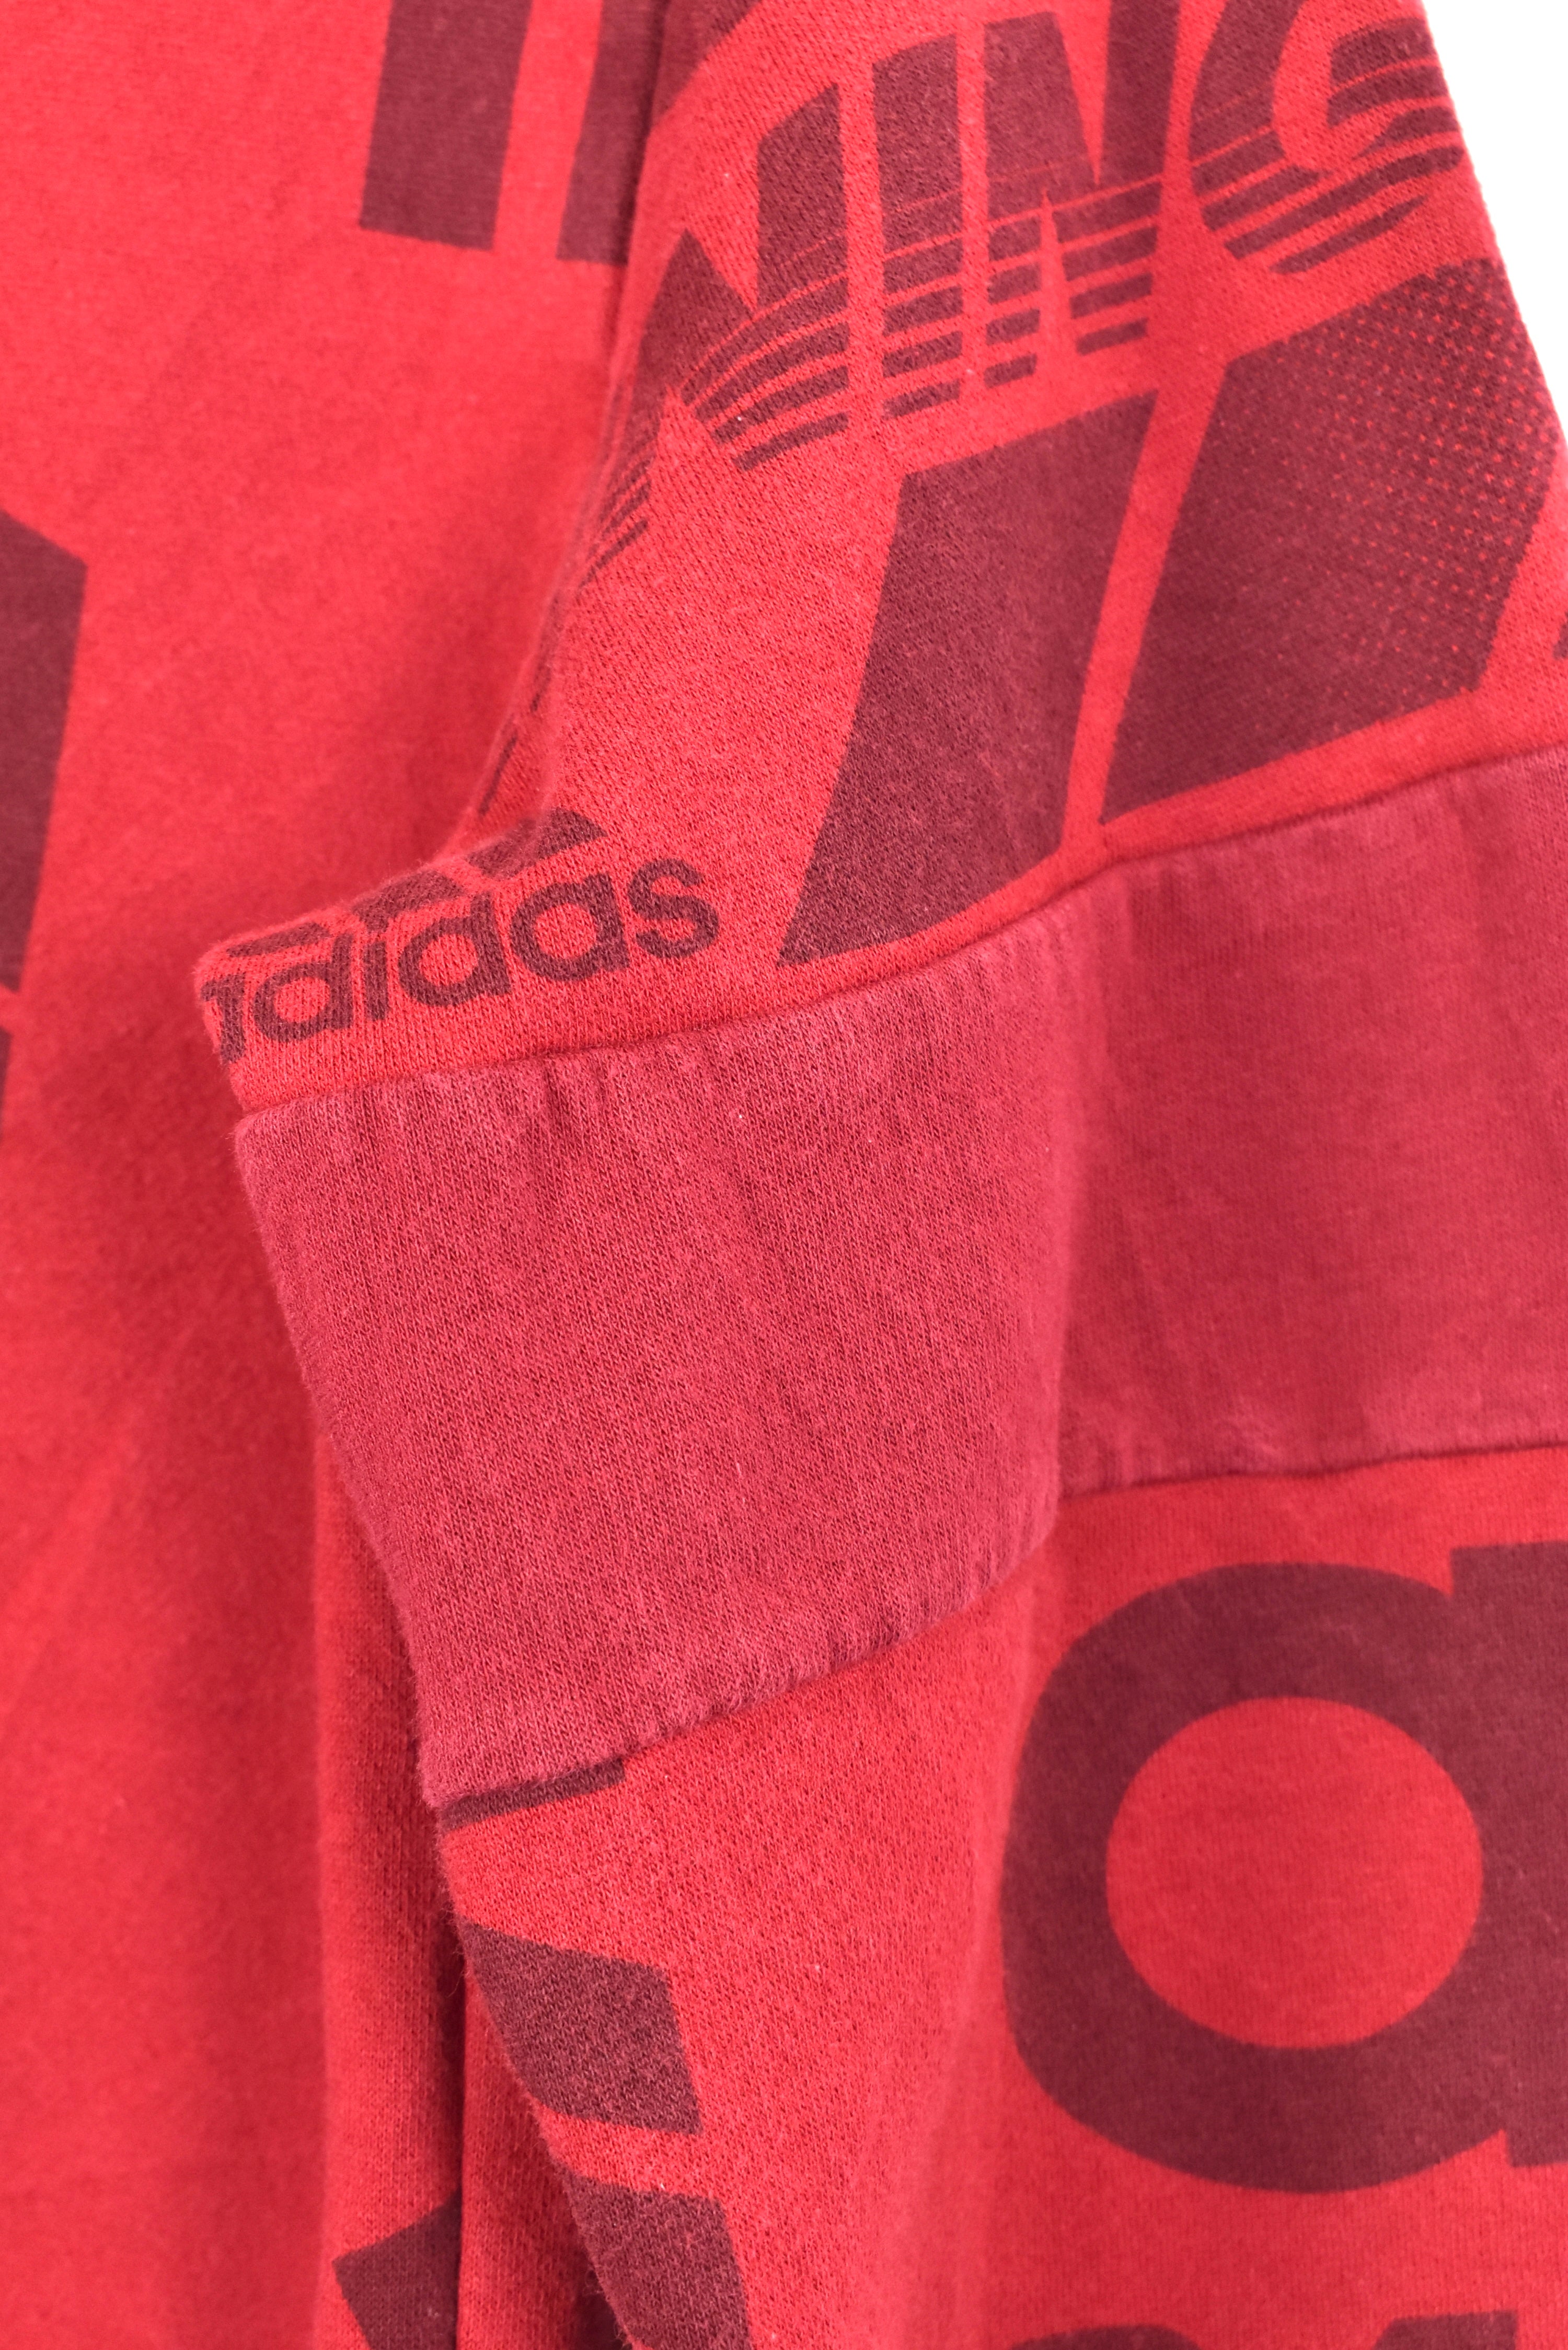 Modern Adidas sweatshirt - medium, burgundy ADIDAS